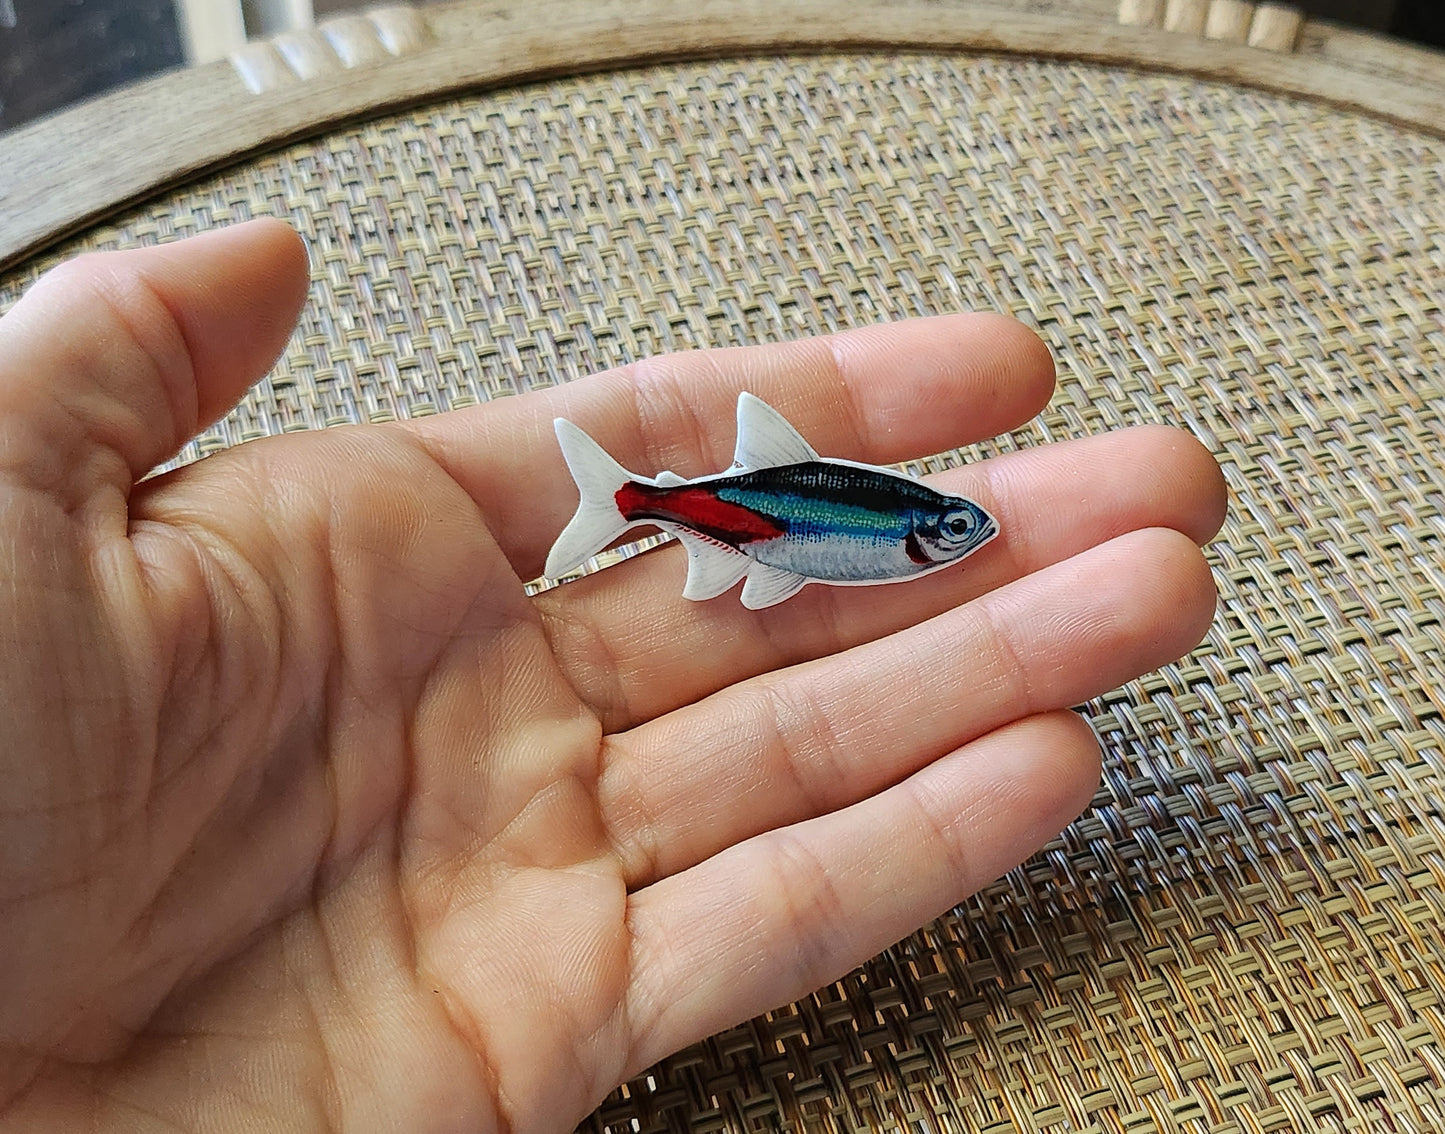 Neon Tetra - Resin Coated Polystyrene Pin - 100% Handmade Fish Pin